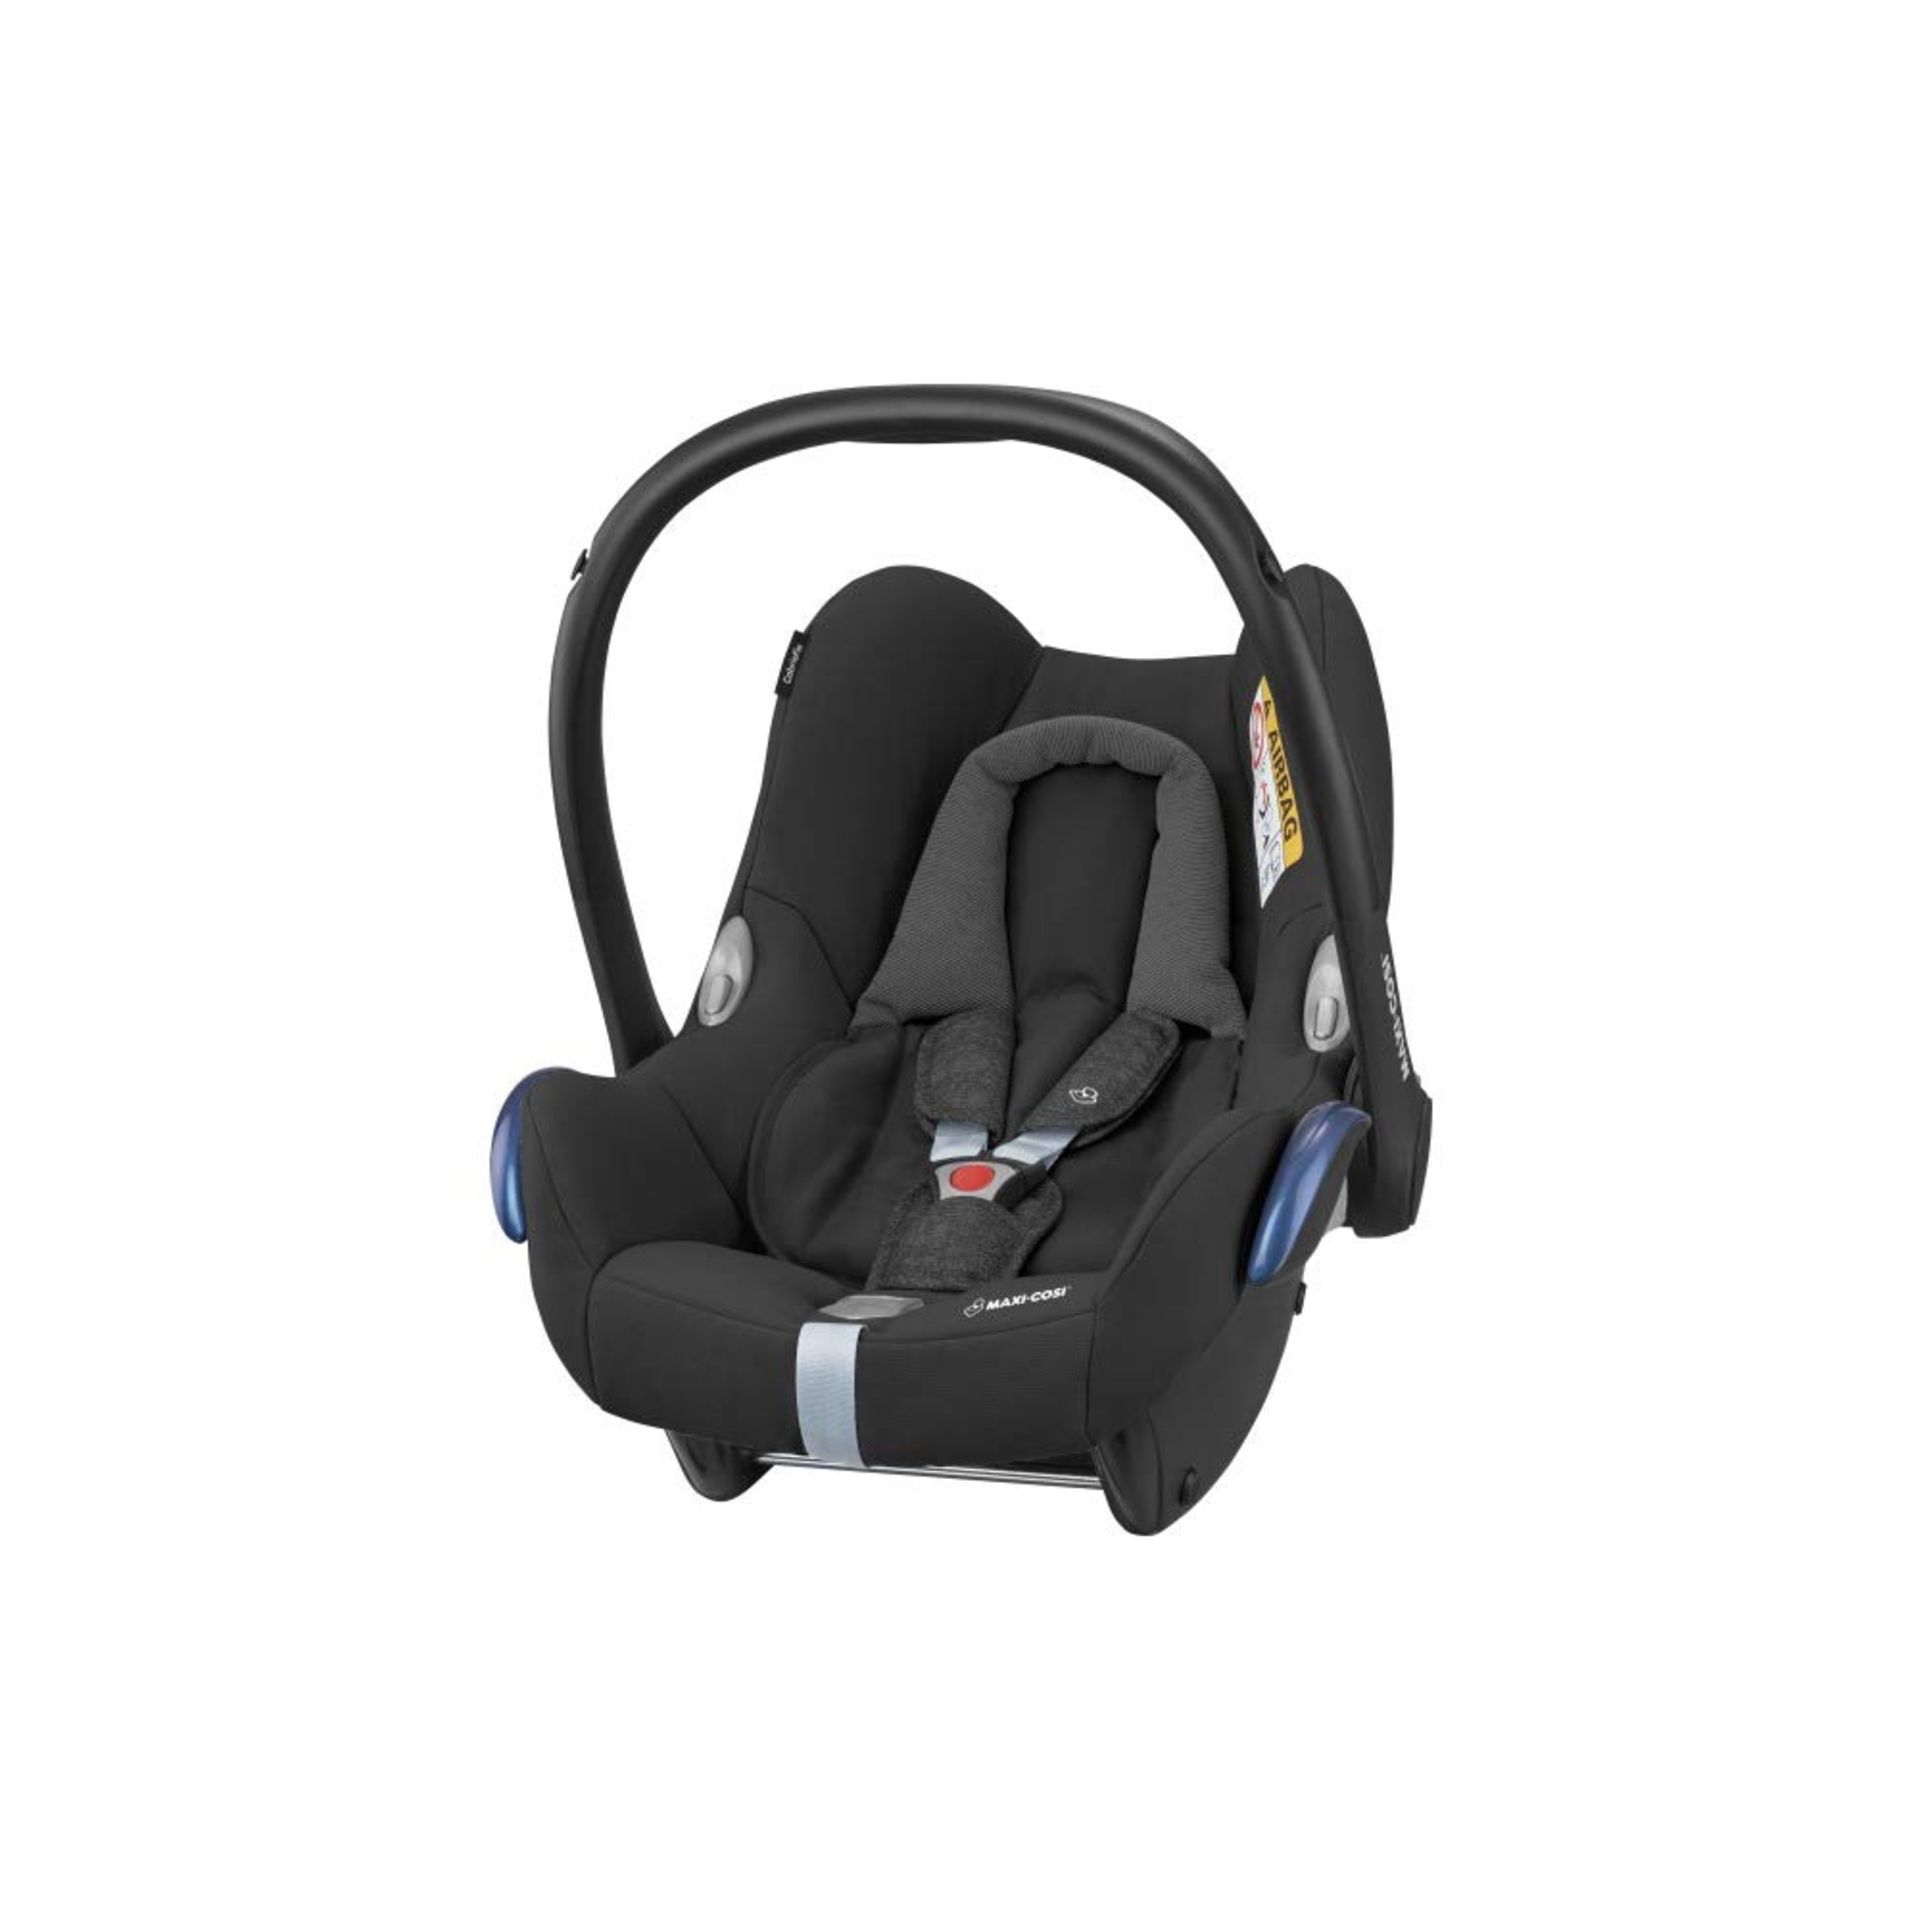 NEW Maxi-Cosi CabrioFix Baby Car Seat Group 0+, ISOFIX RRP £139.99.